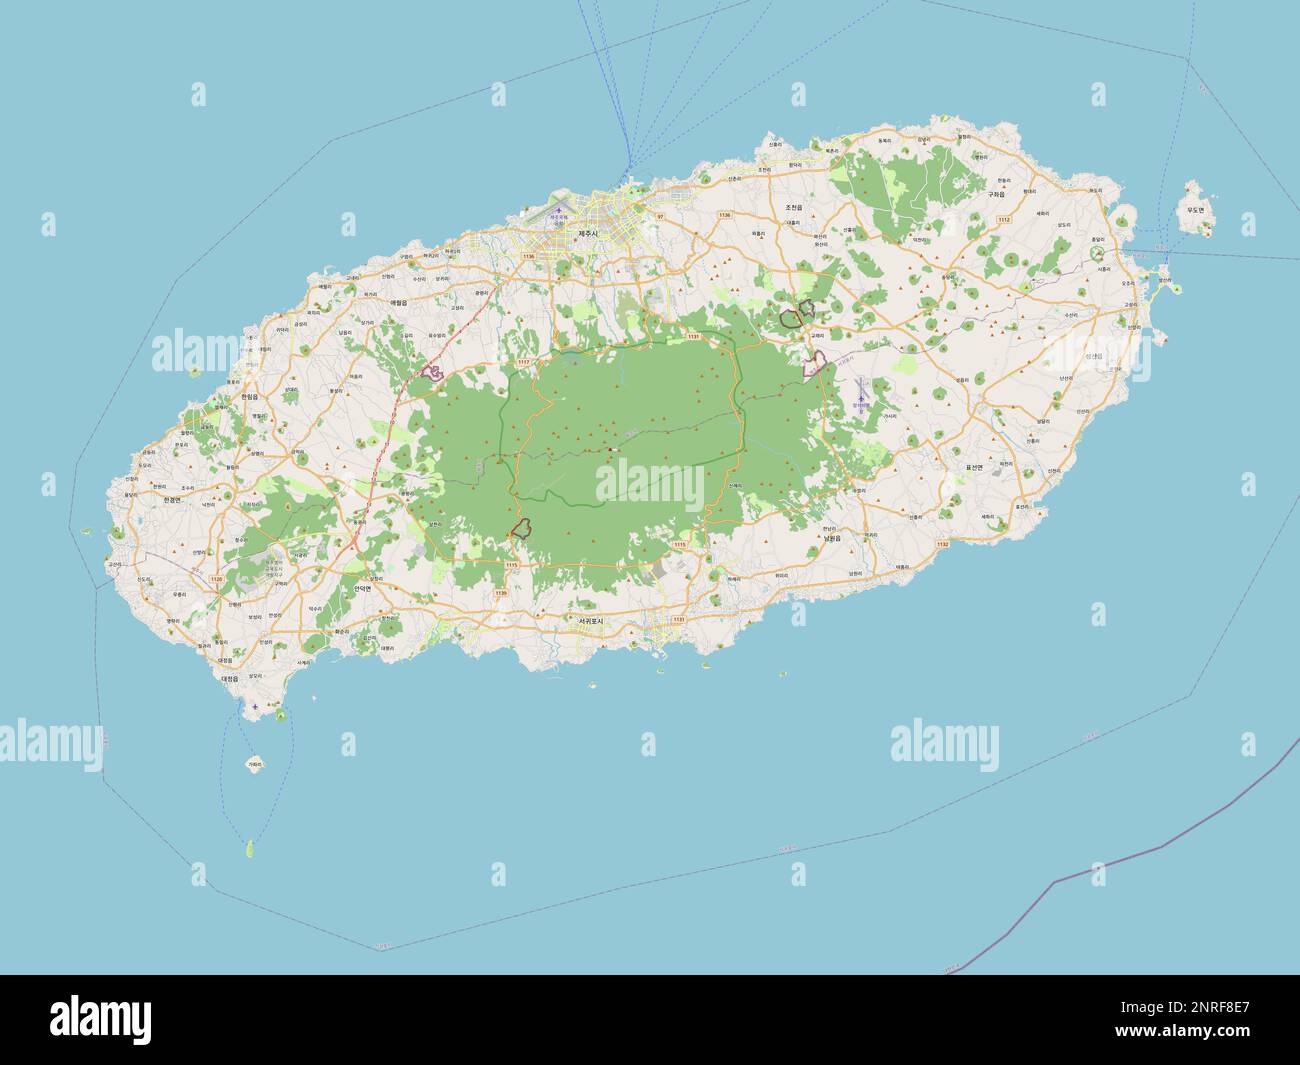 Jeju, province of South Korea. Open Street Map Stock Photo